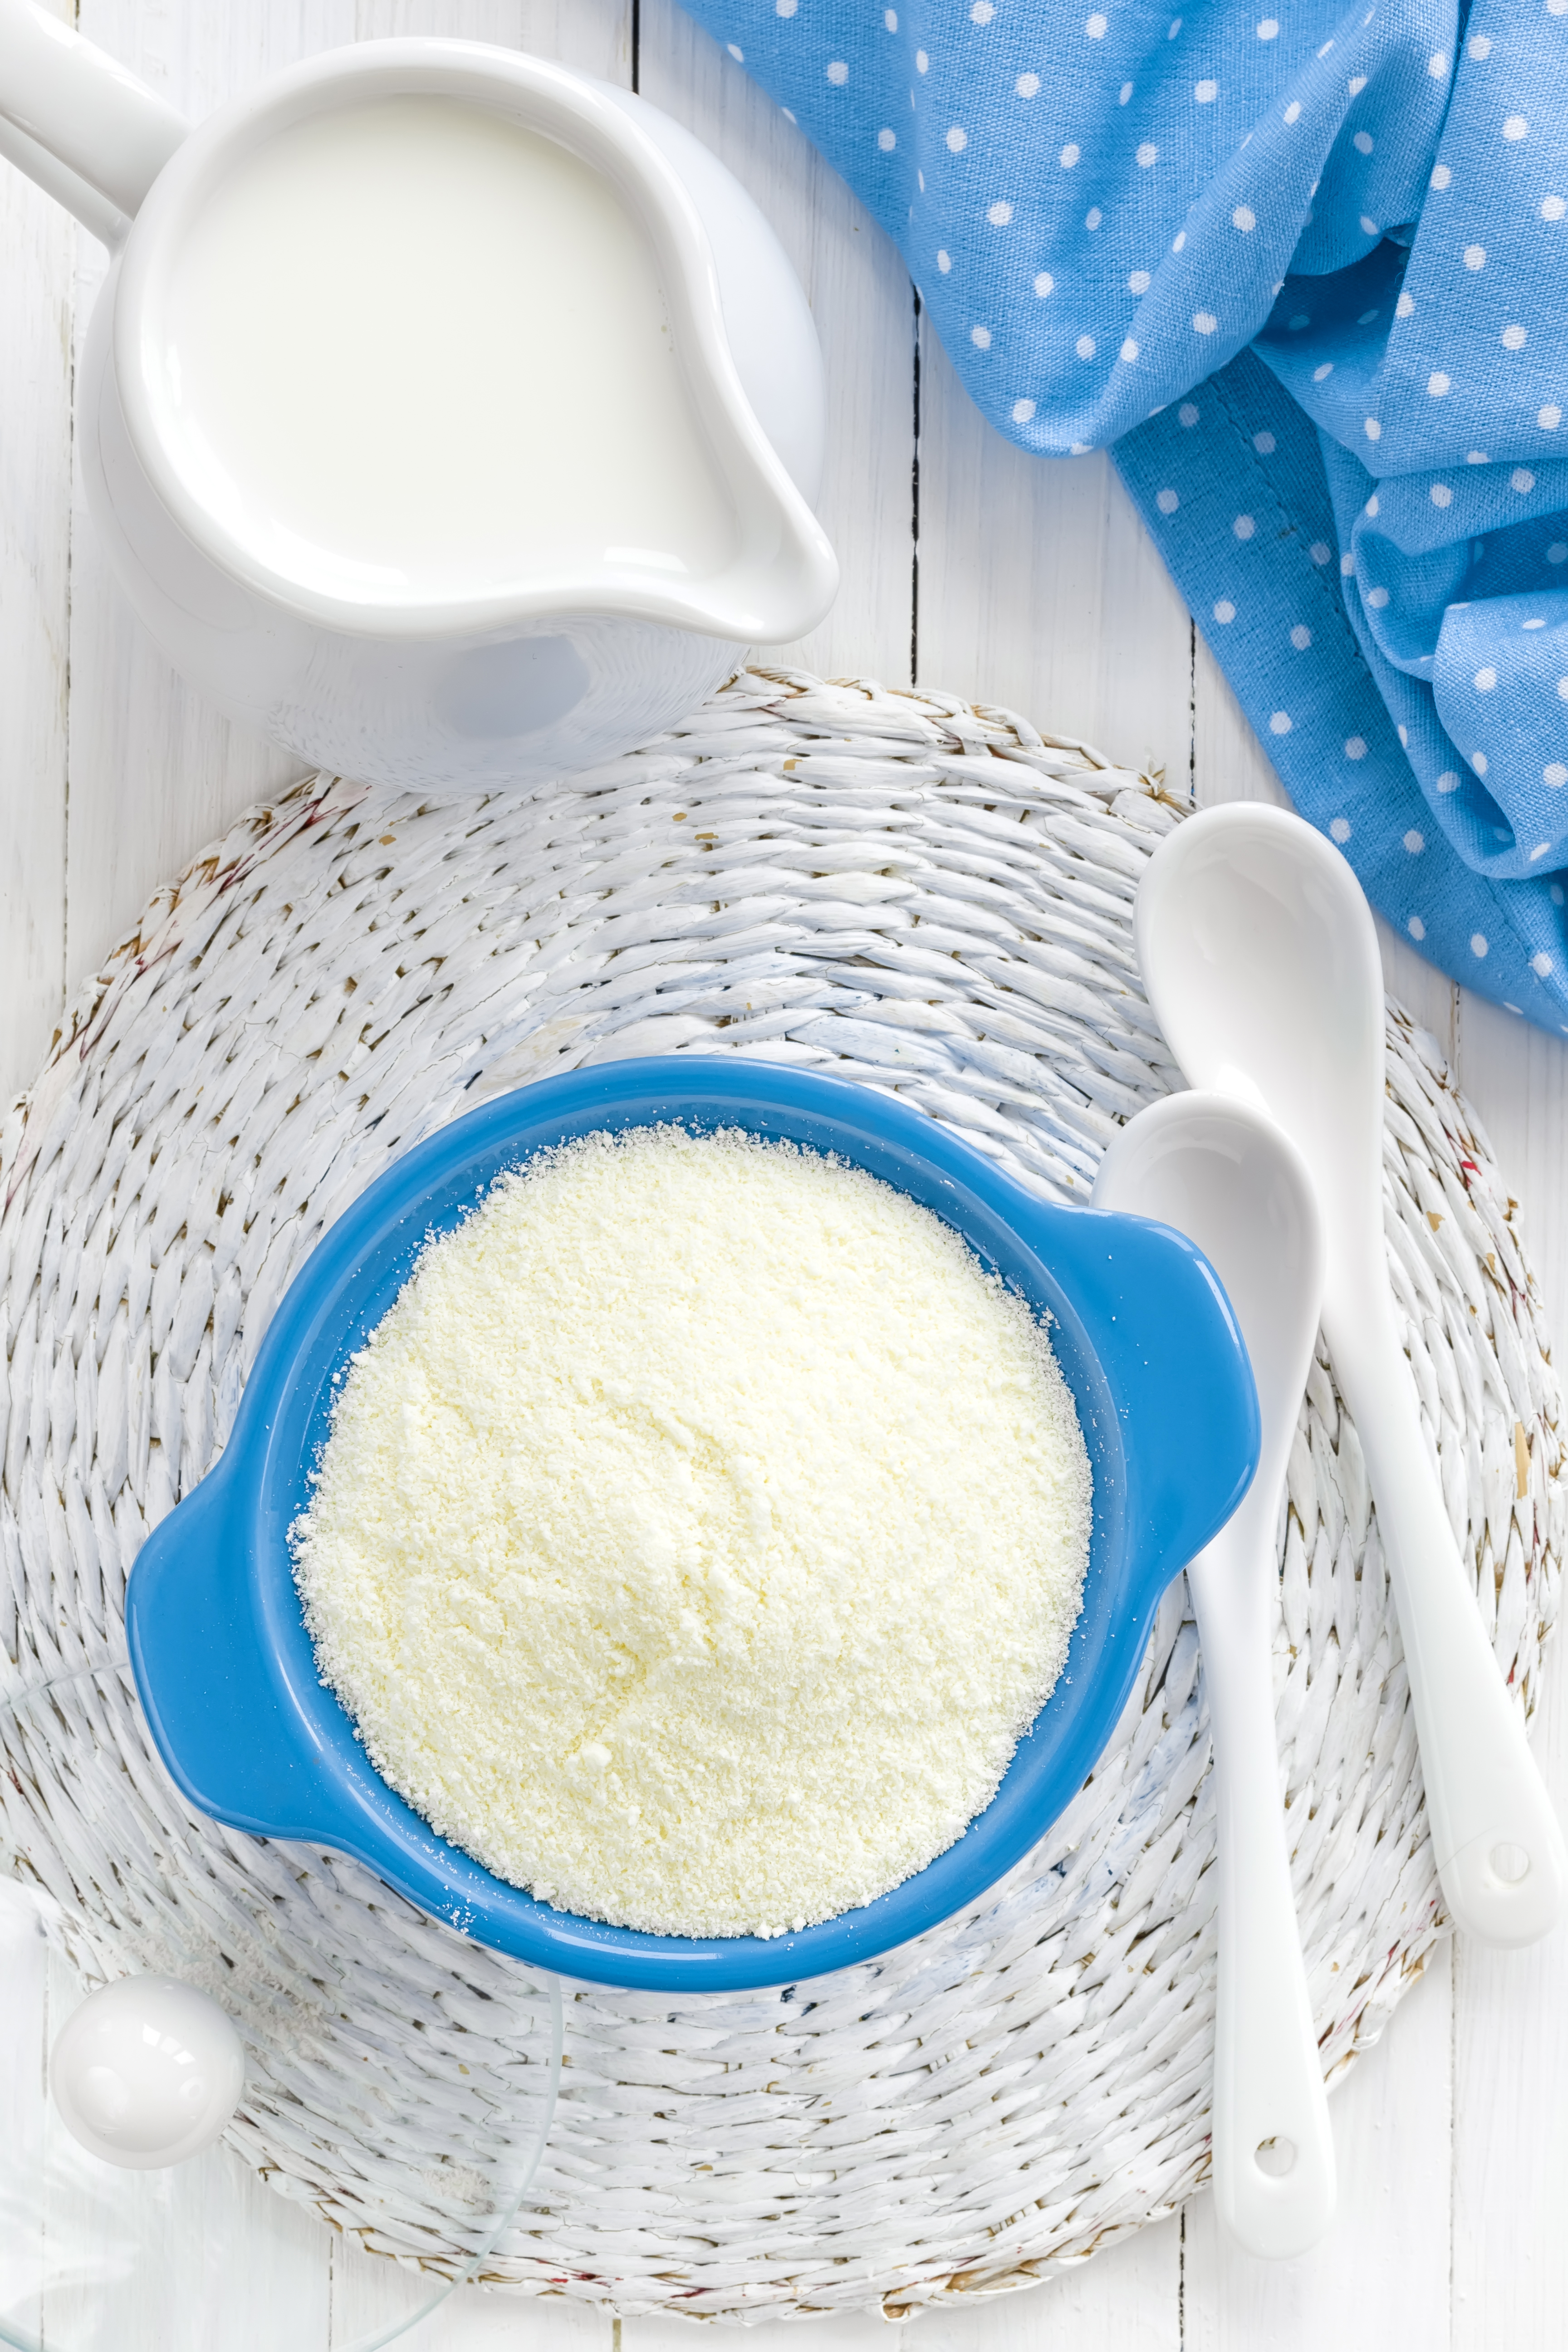 The Nutritional Marvel: Exploring Organic Milk Powder